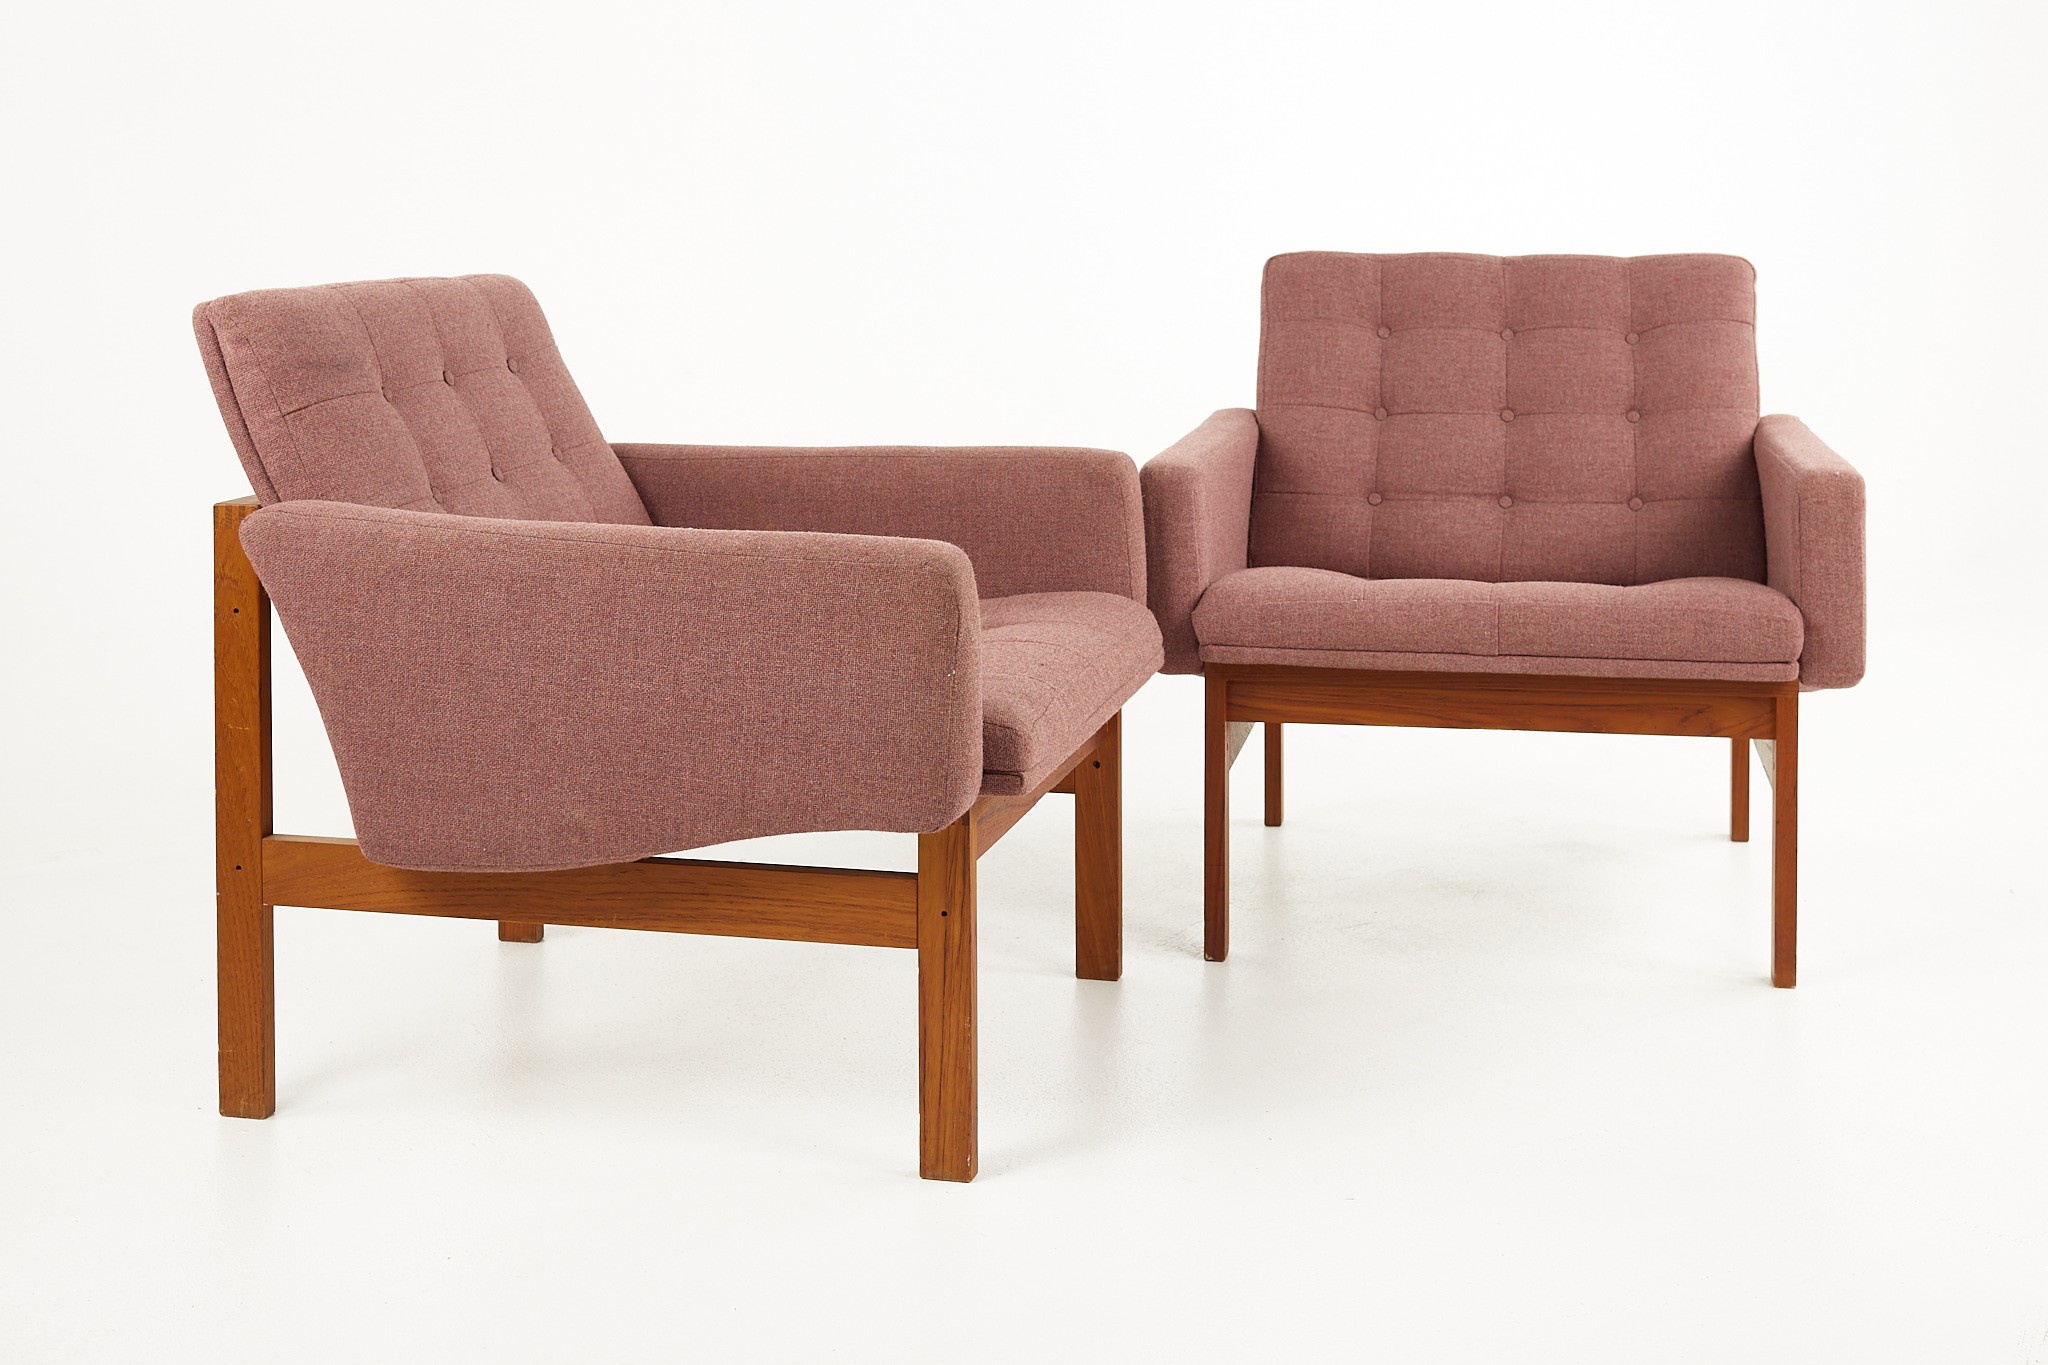 Poul Cadovius Mid Century Teak Lounge Chairs - a Pair